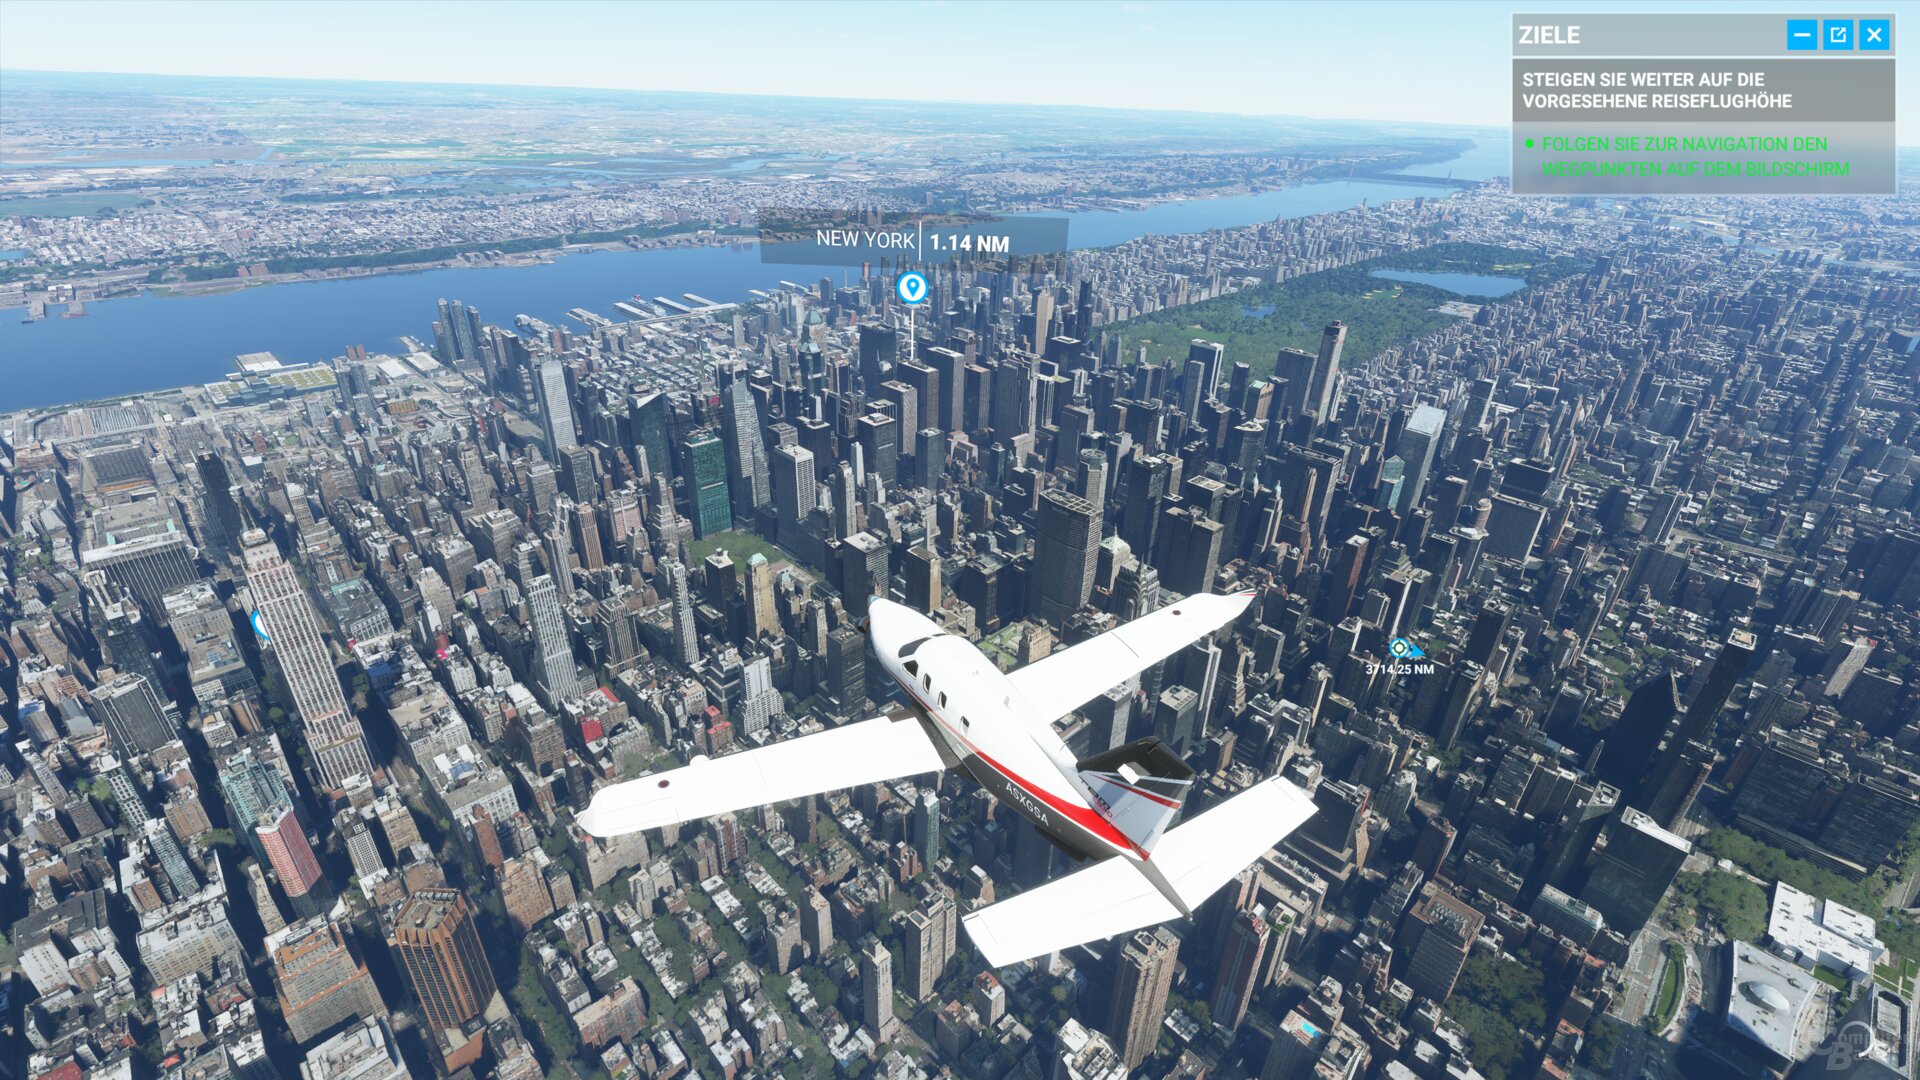 Flight Simulator im Test